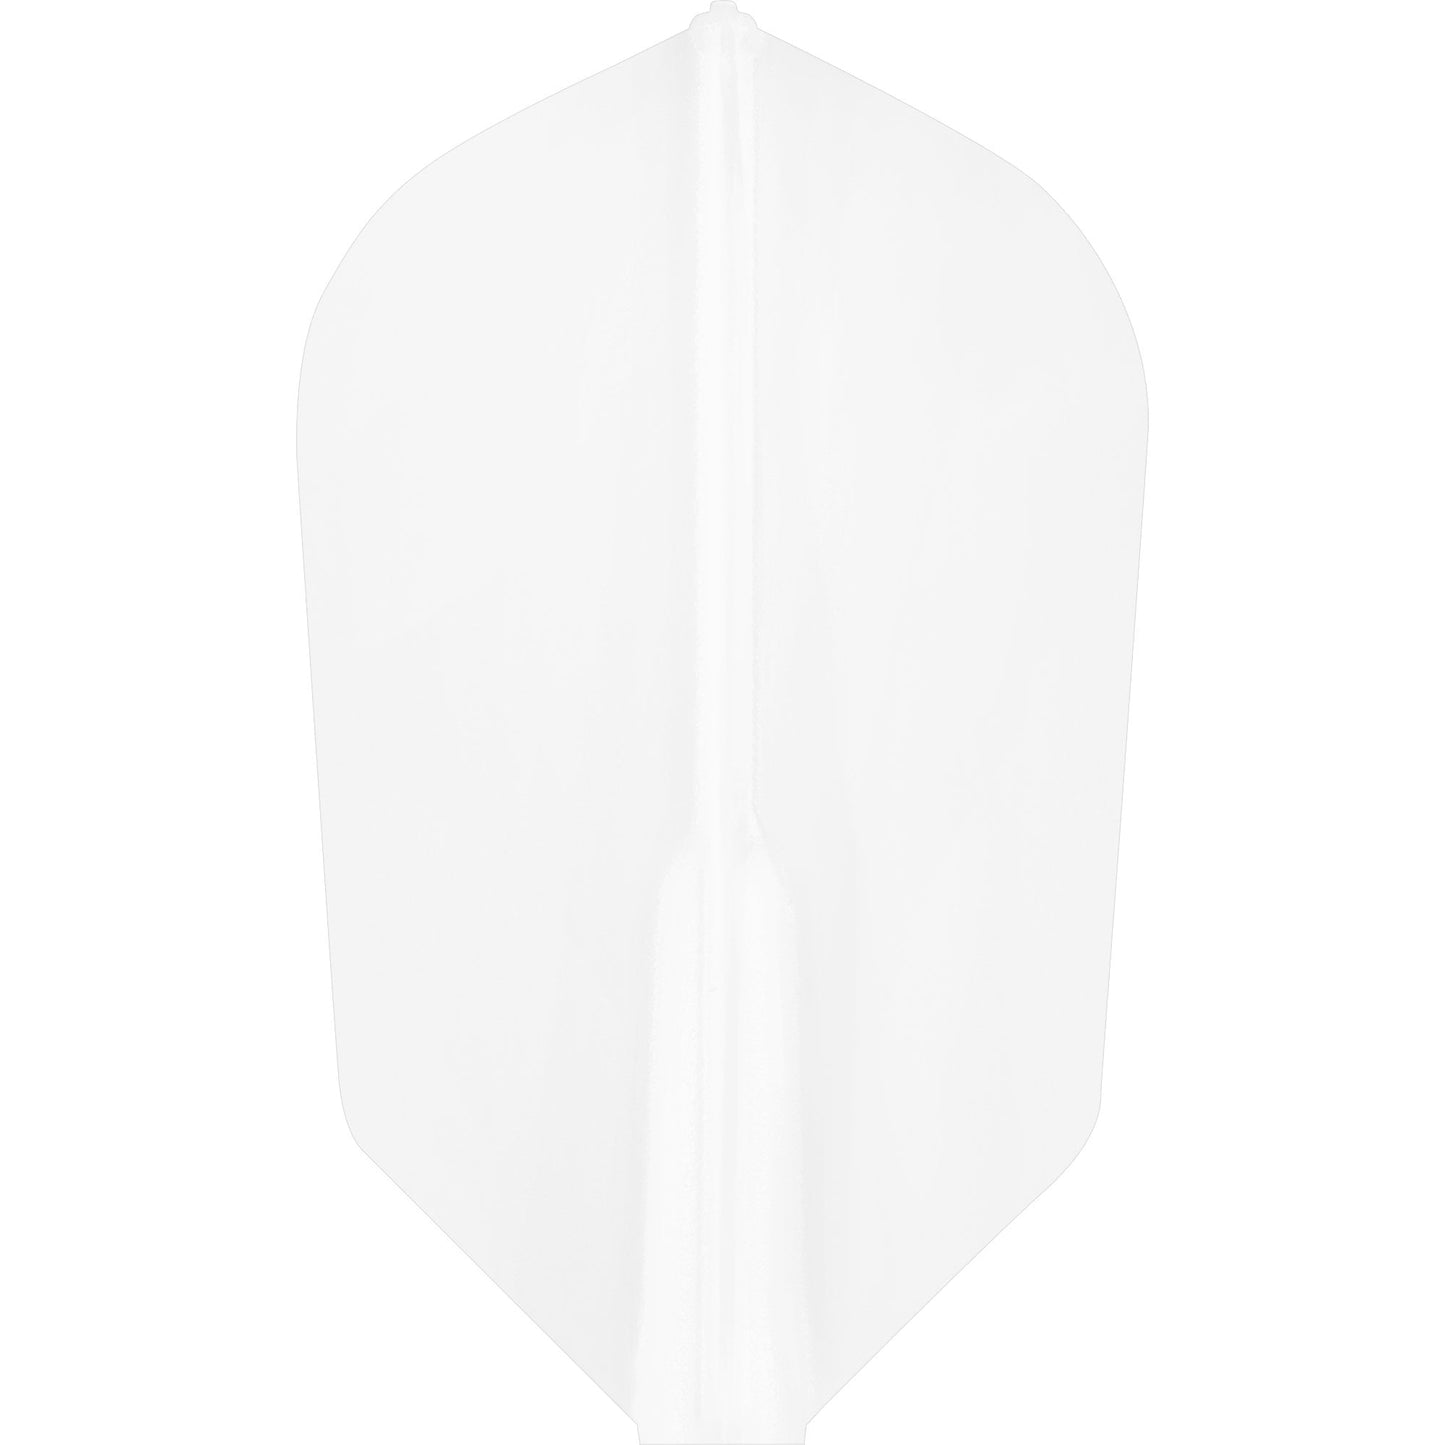 Cosmo Darts - Fit Flight - Set of 6 - SP Slim White